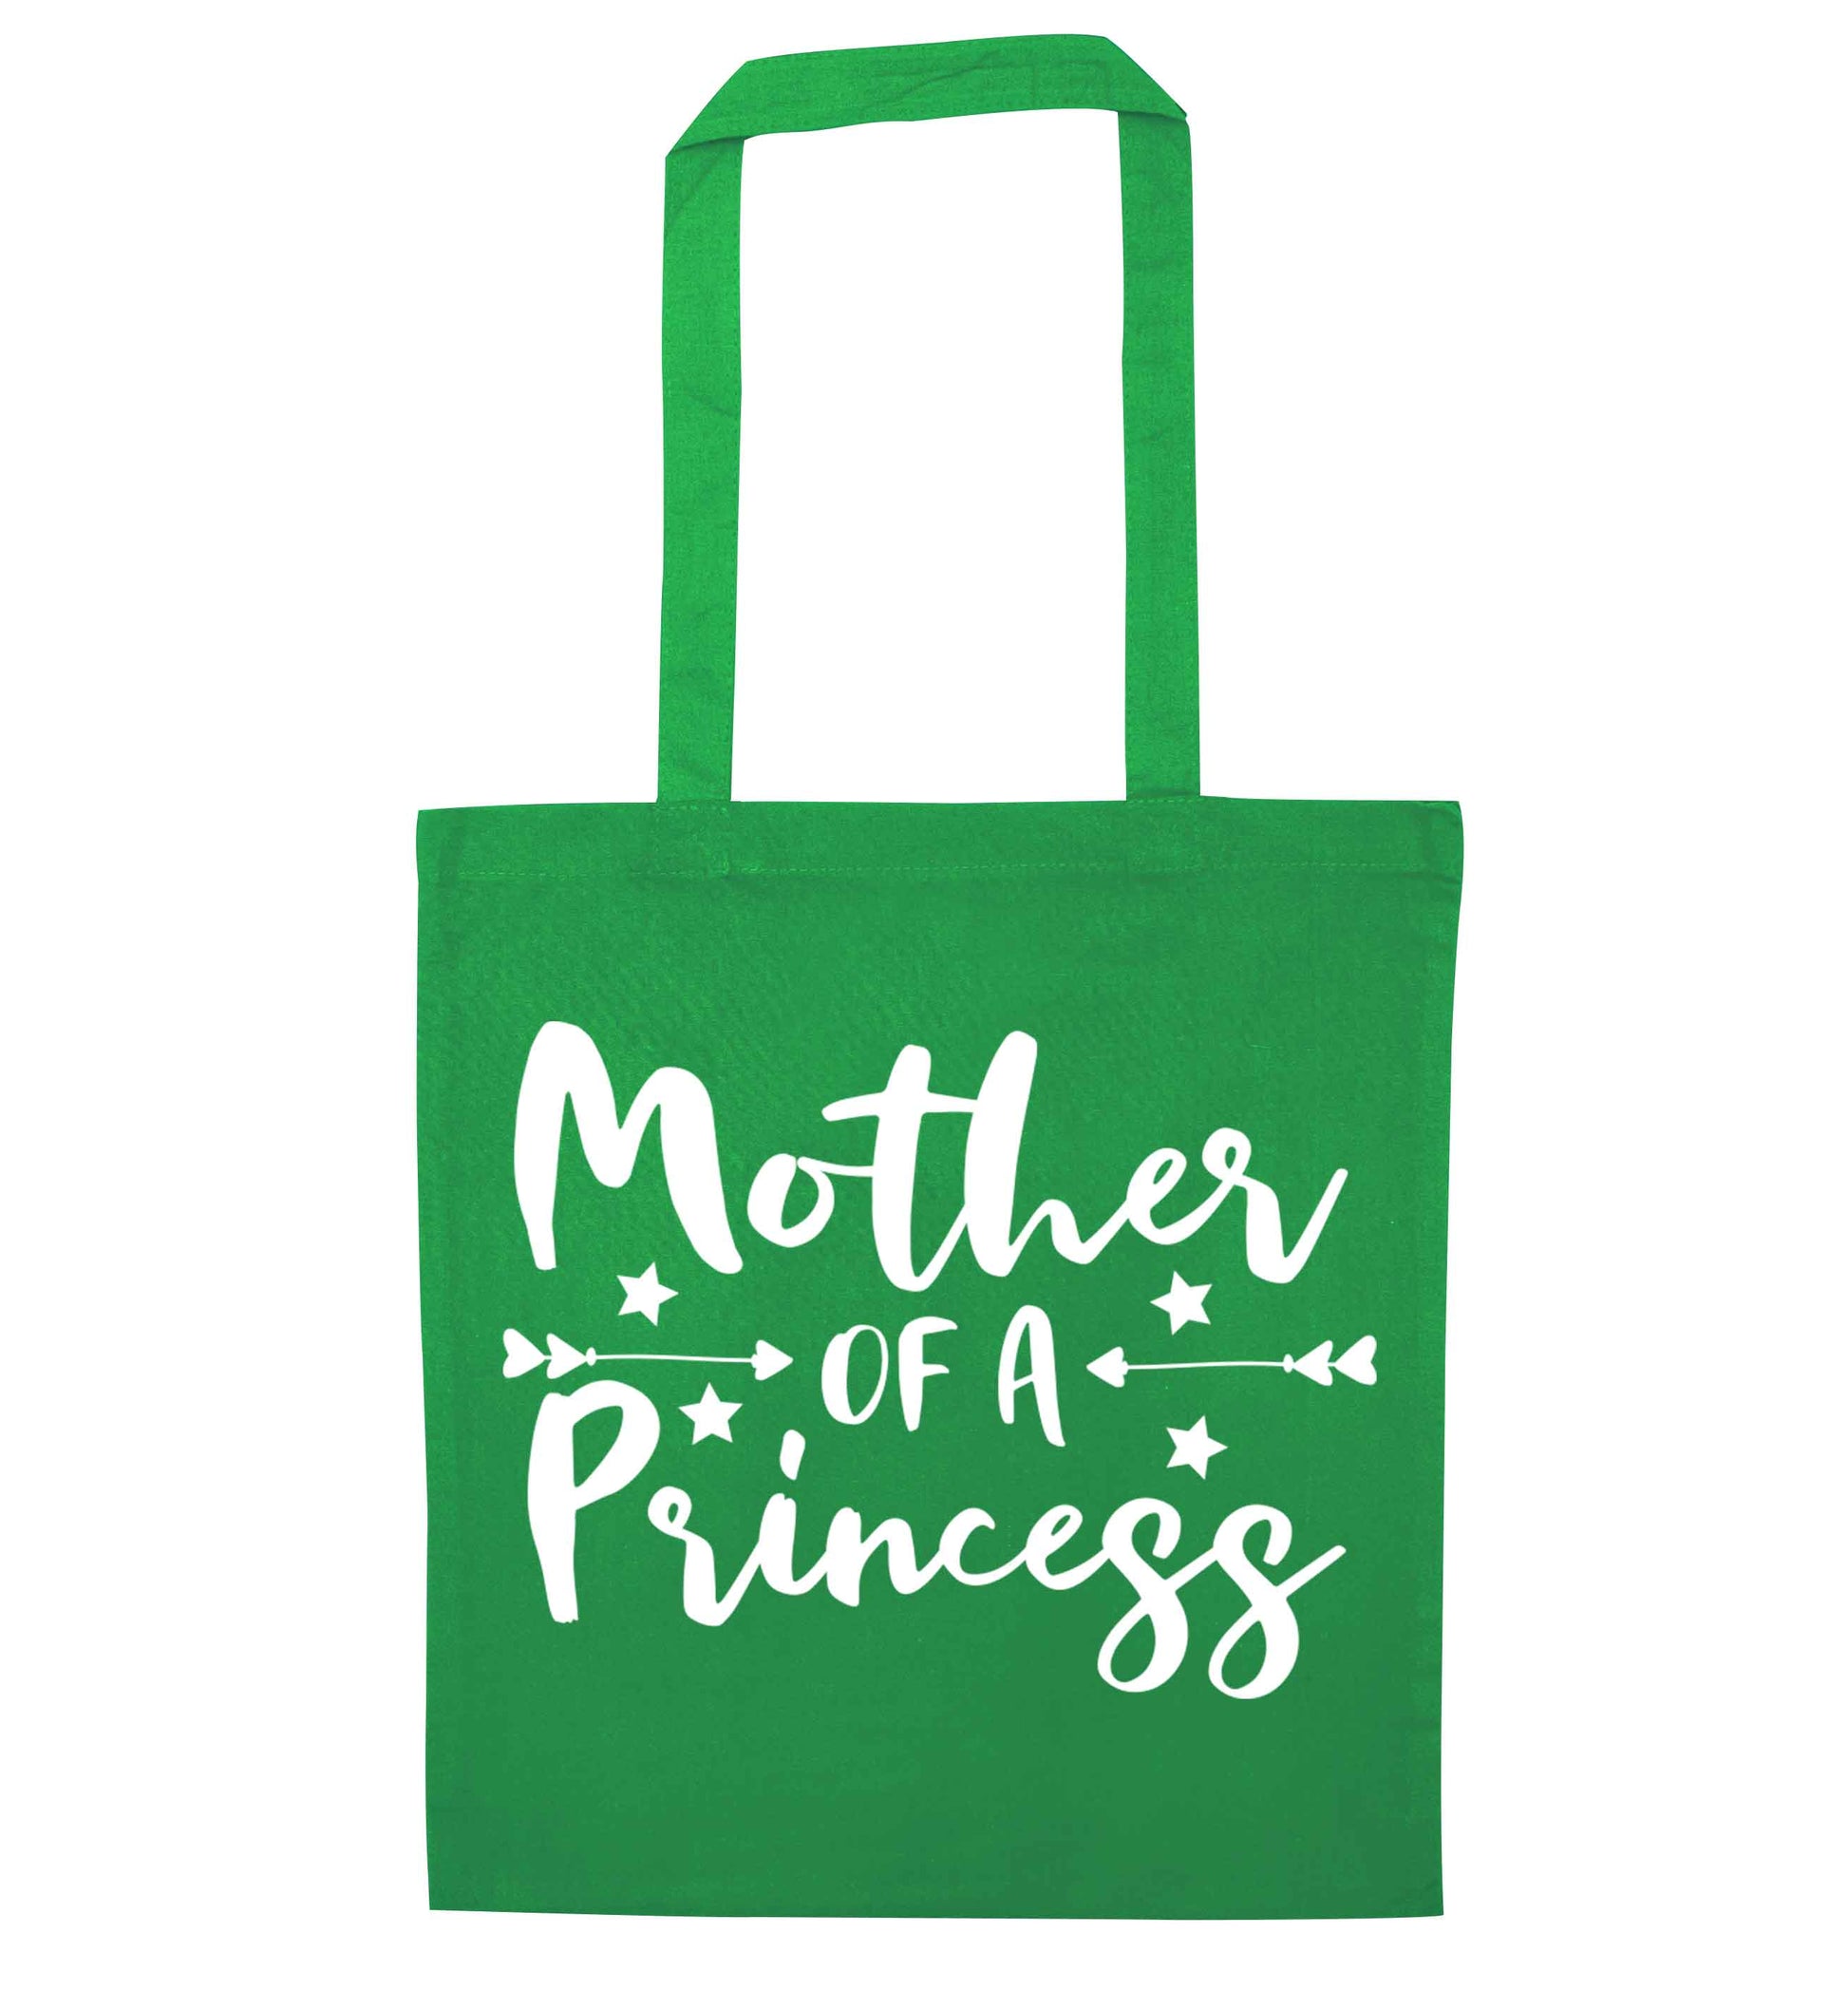 Mother of a princess green tote bag